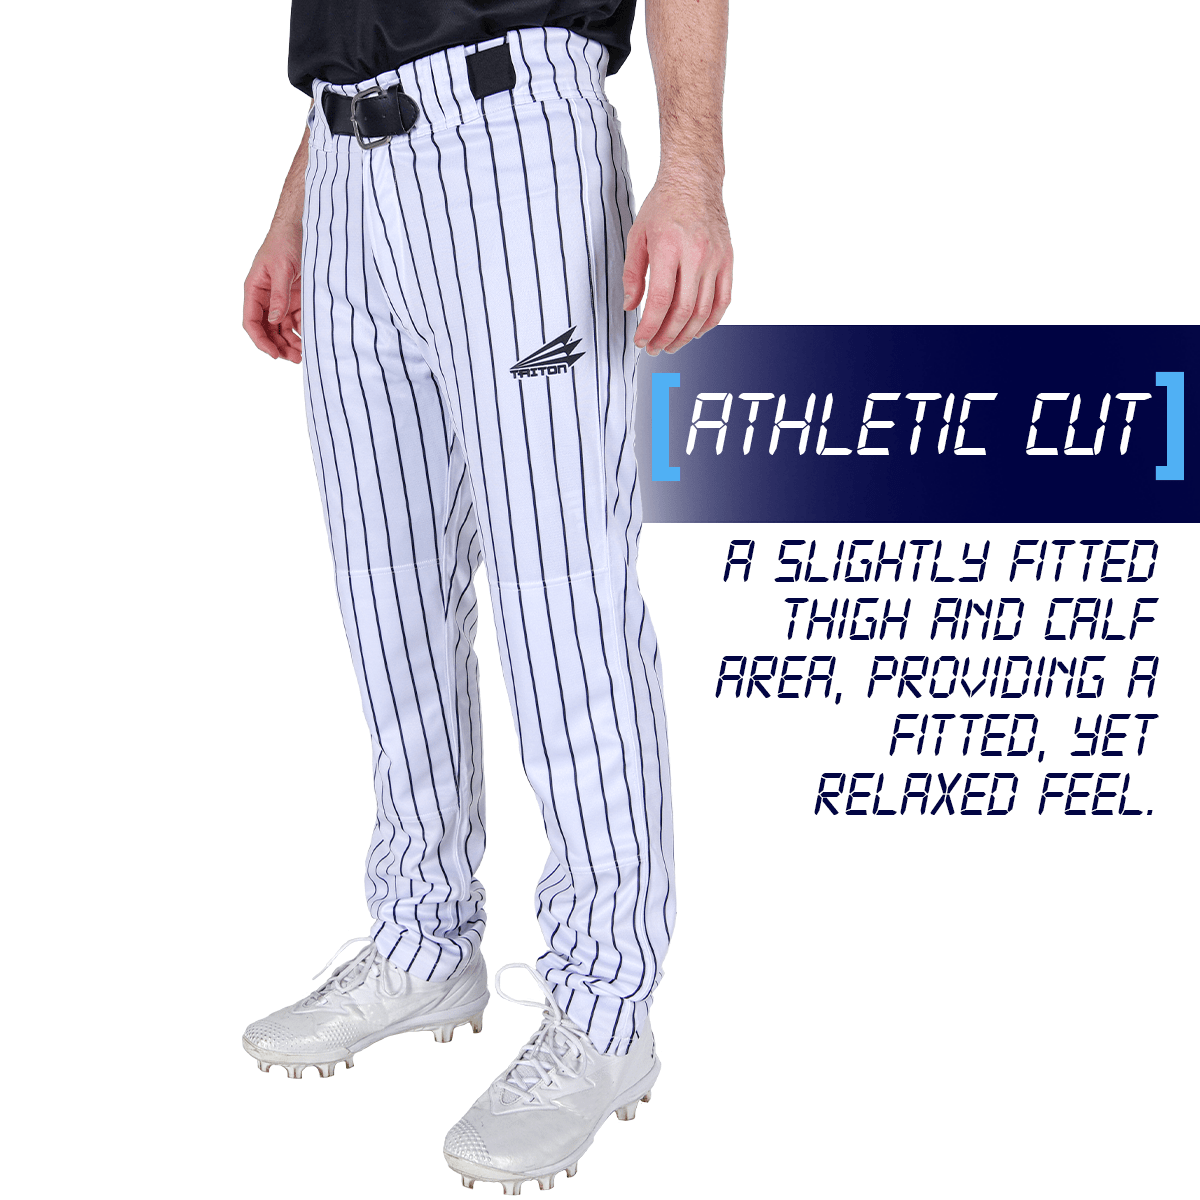 Triton Elite Athletic Cut Baseball Pant (Pinstripe)